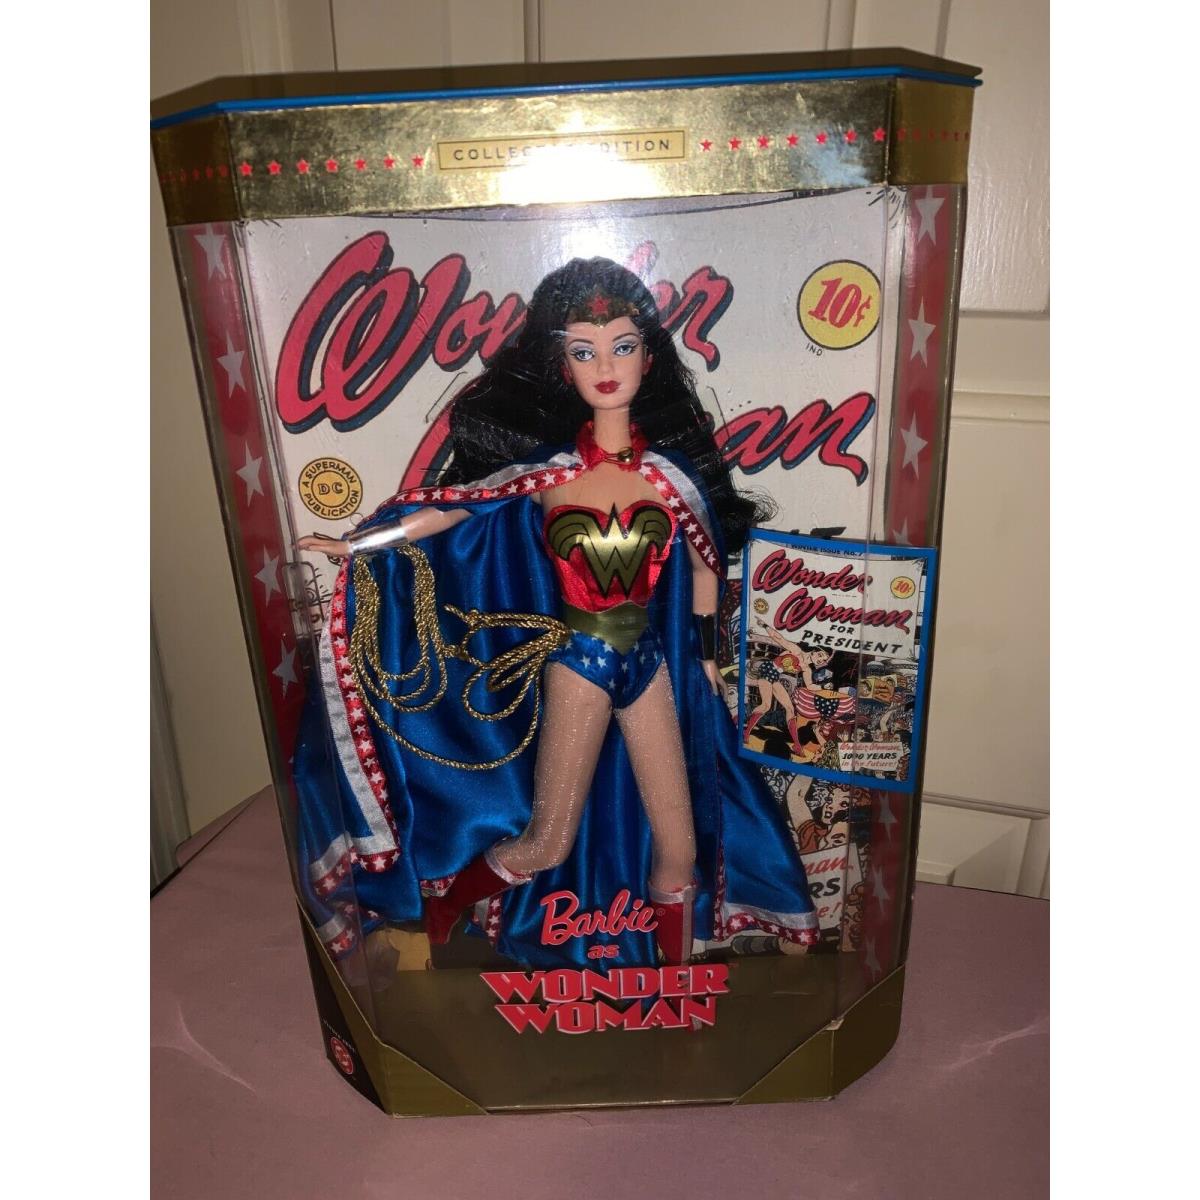 Barbie as Wonder Woman - Mattel Collector Edition 1999 Warner Bros / DC Nrfb